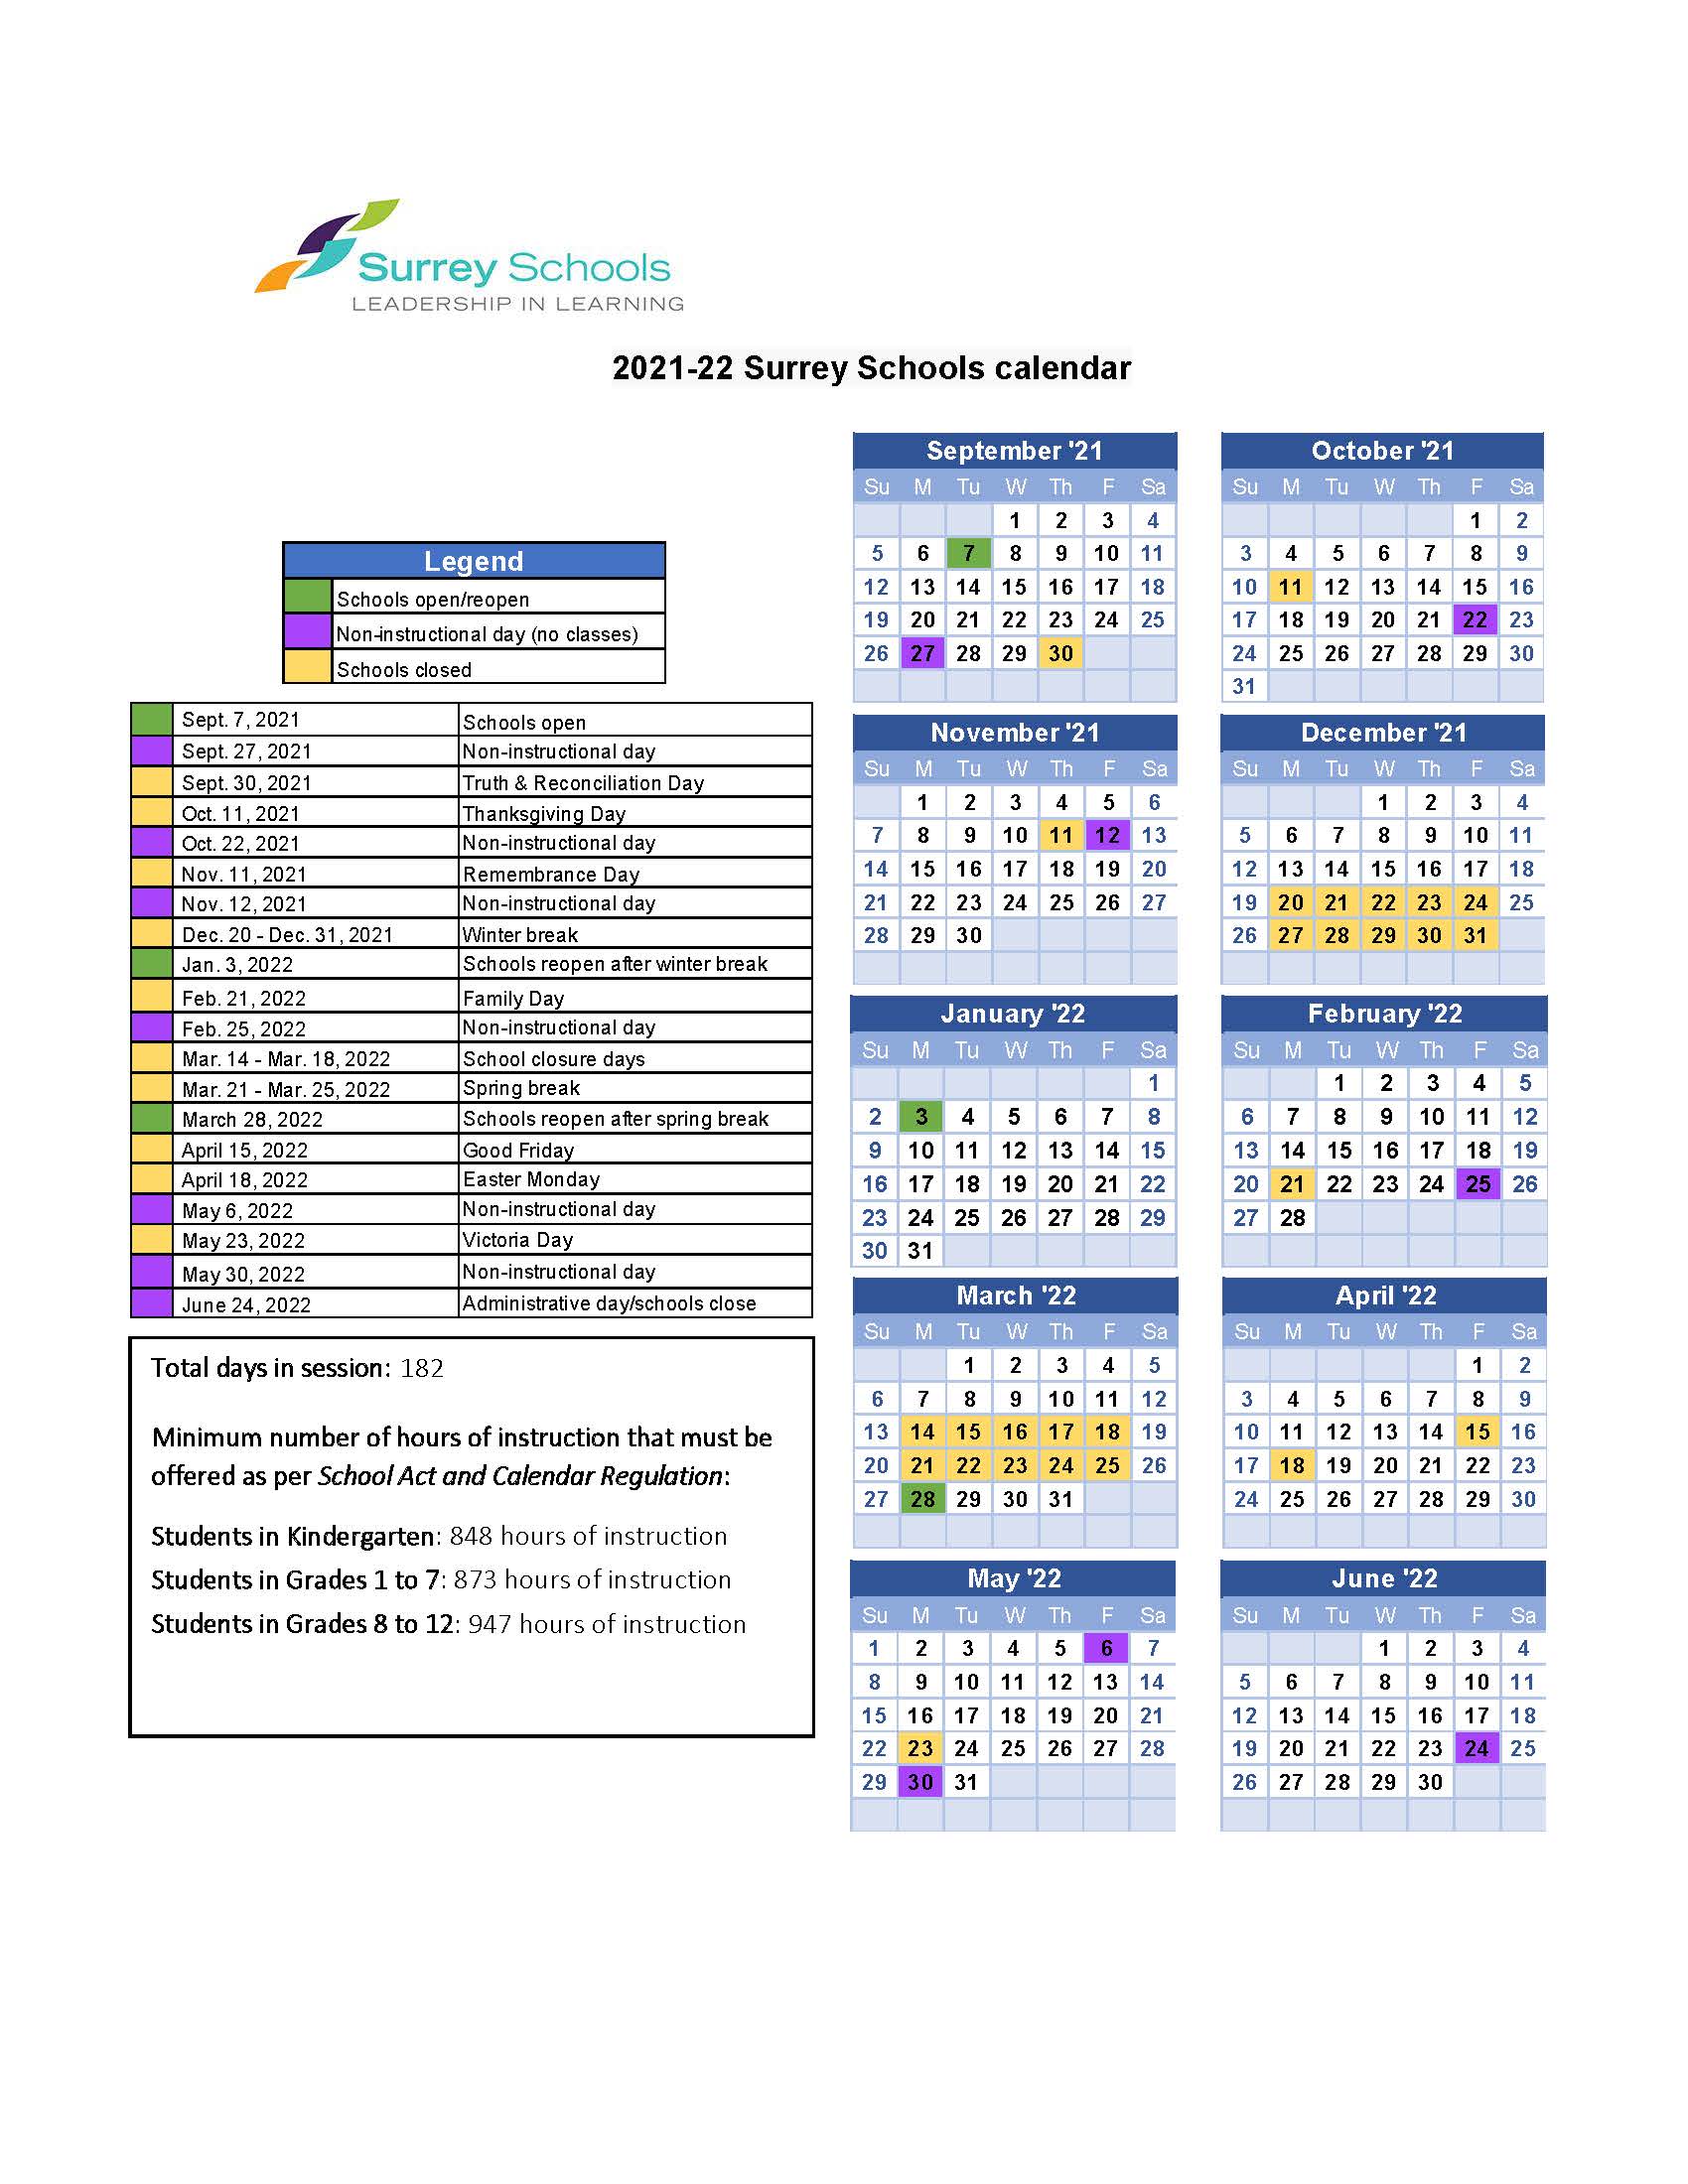 2021-2022 District Calendar.jpg